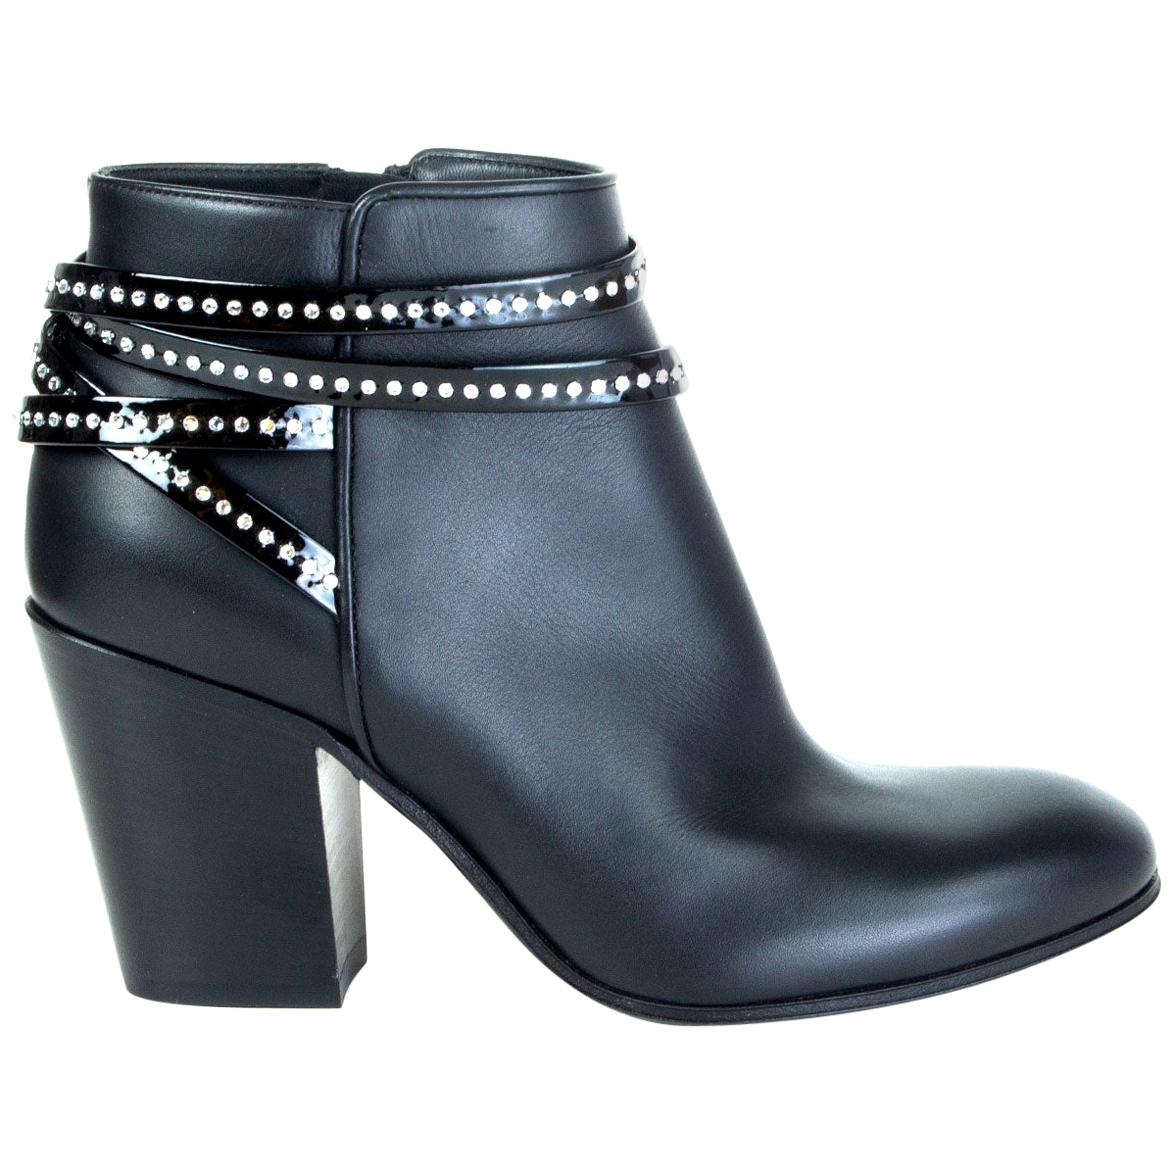 GIUSEPPE ZANOTTI black leather EMBELLISHED Ankle Boots Shoes 37